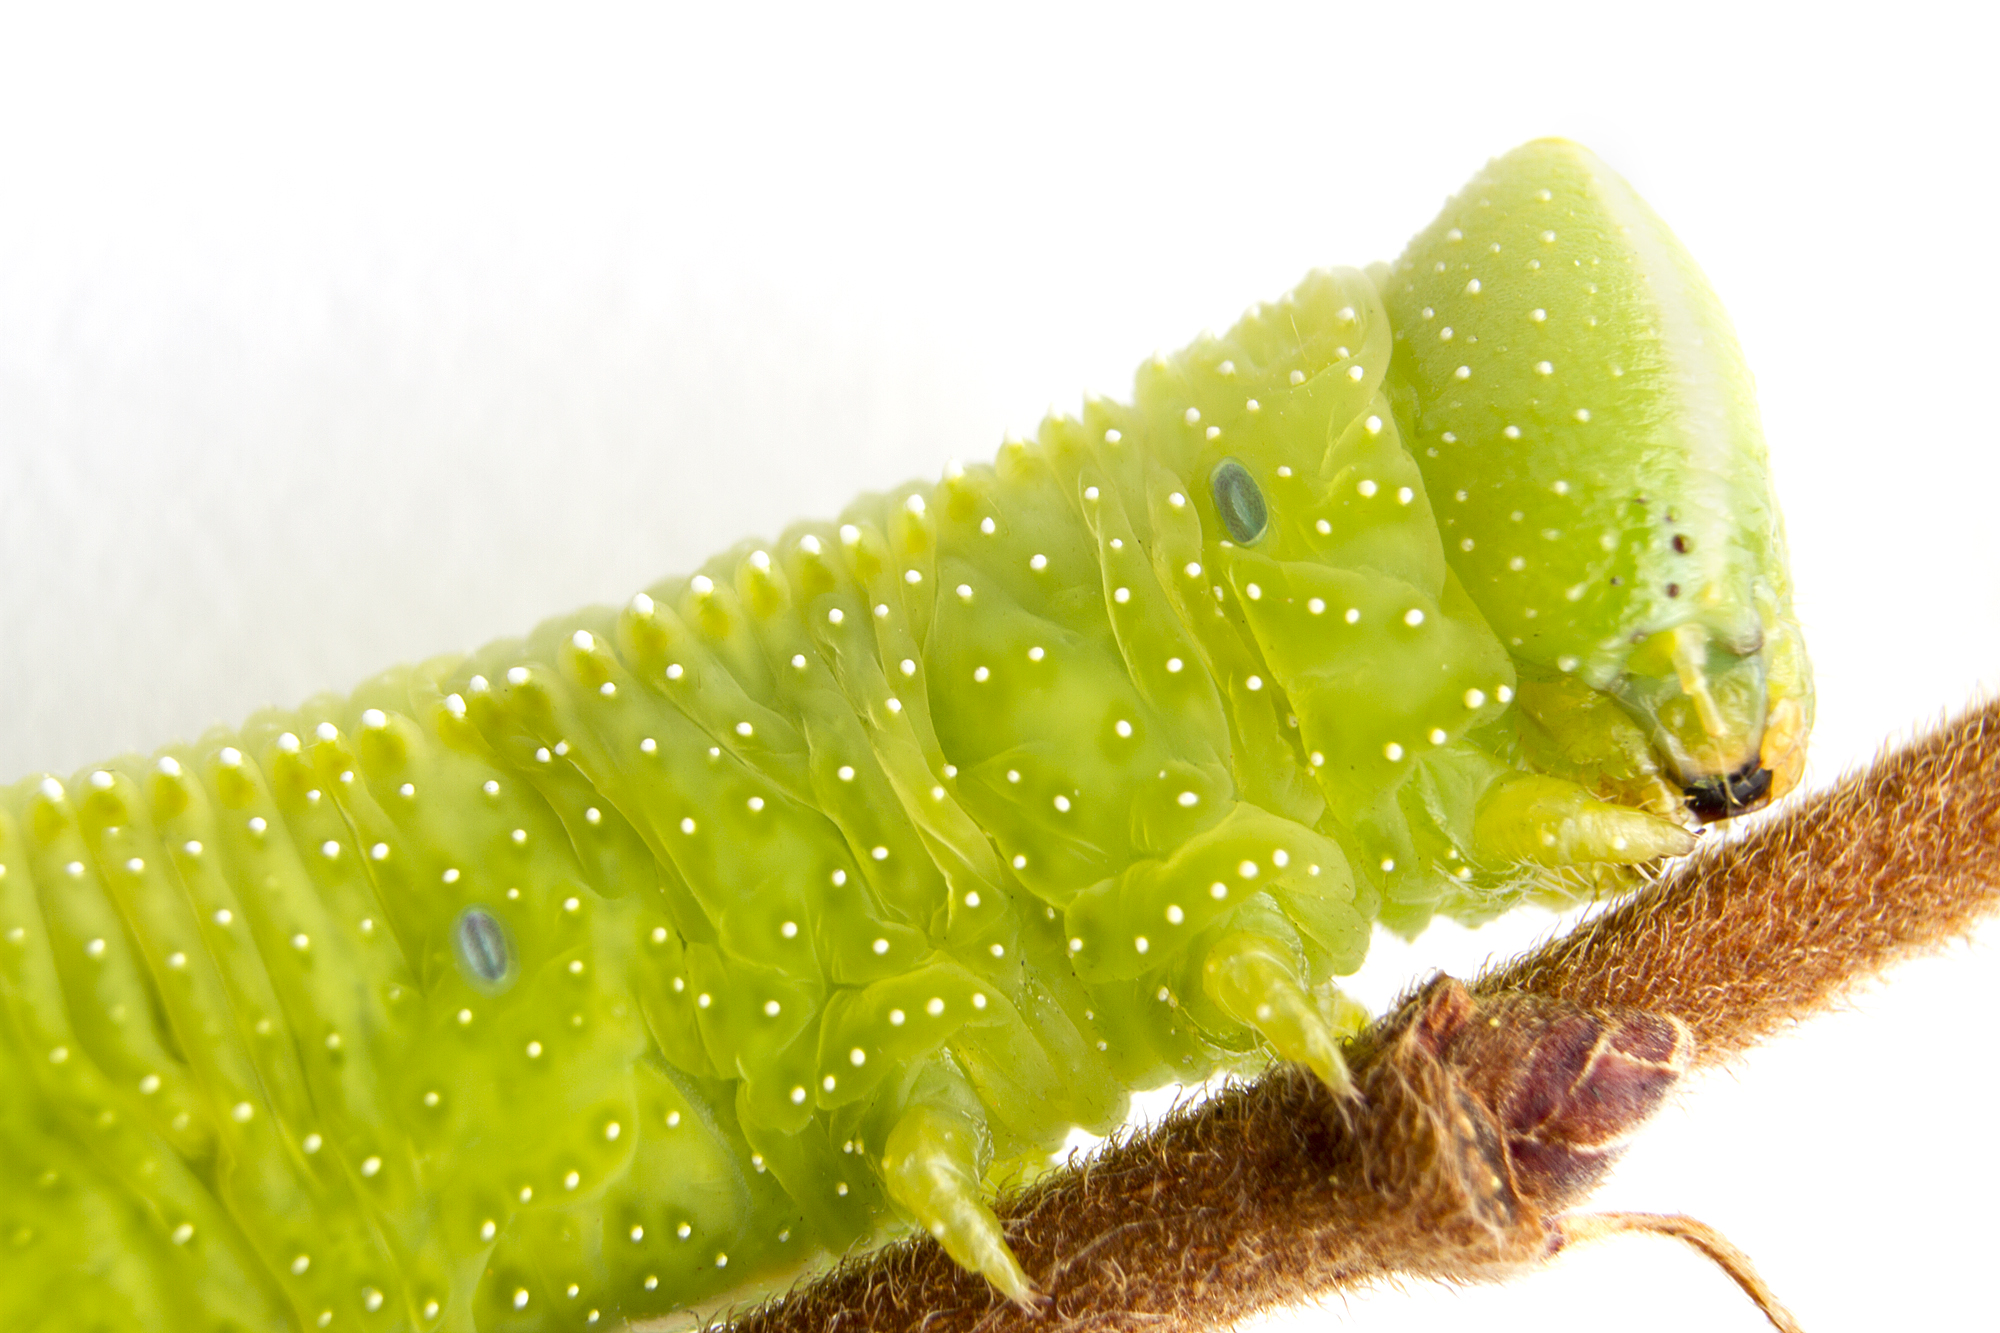 Caterpillar on a twig - close-up photo